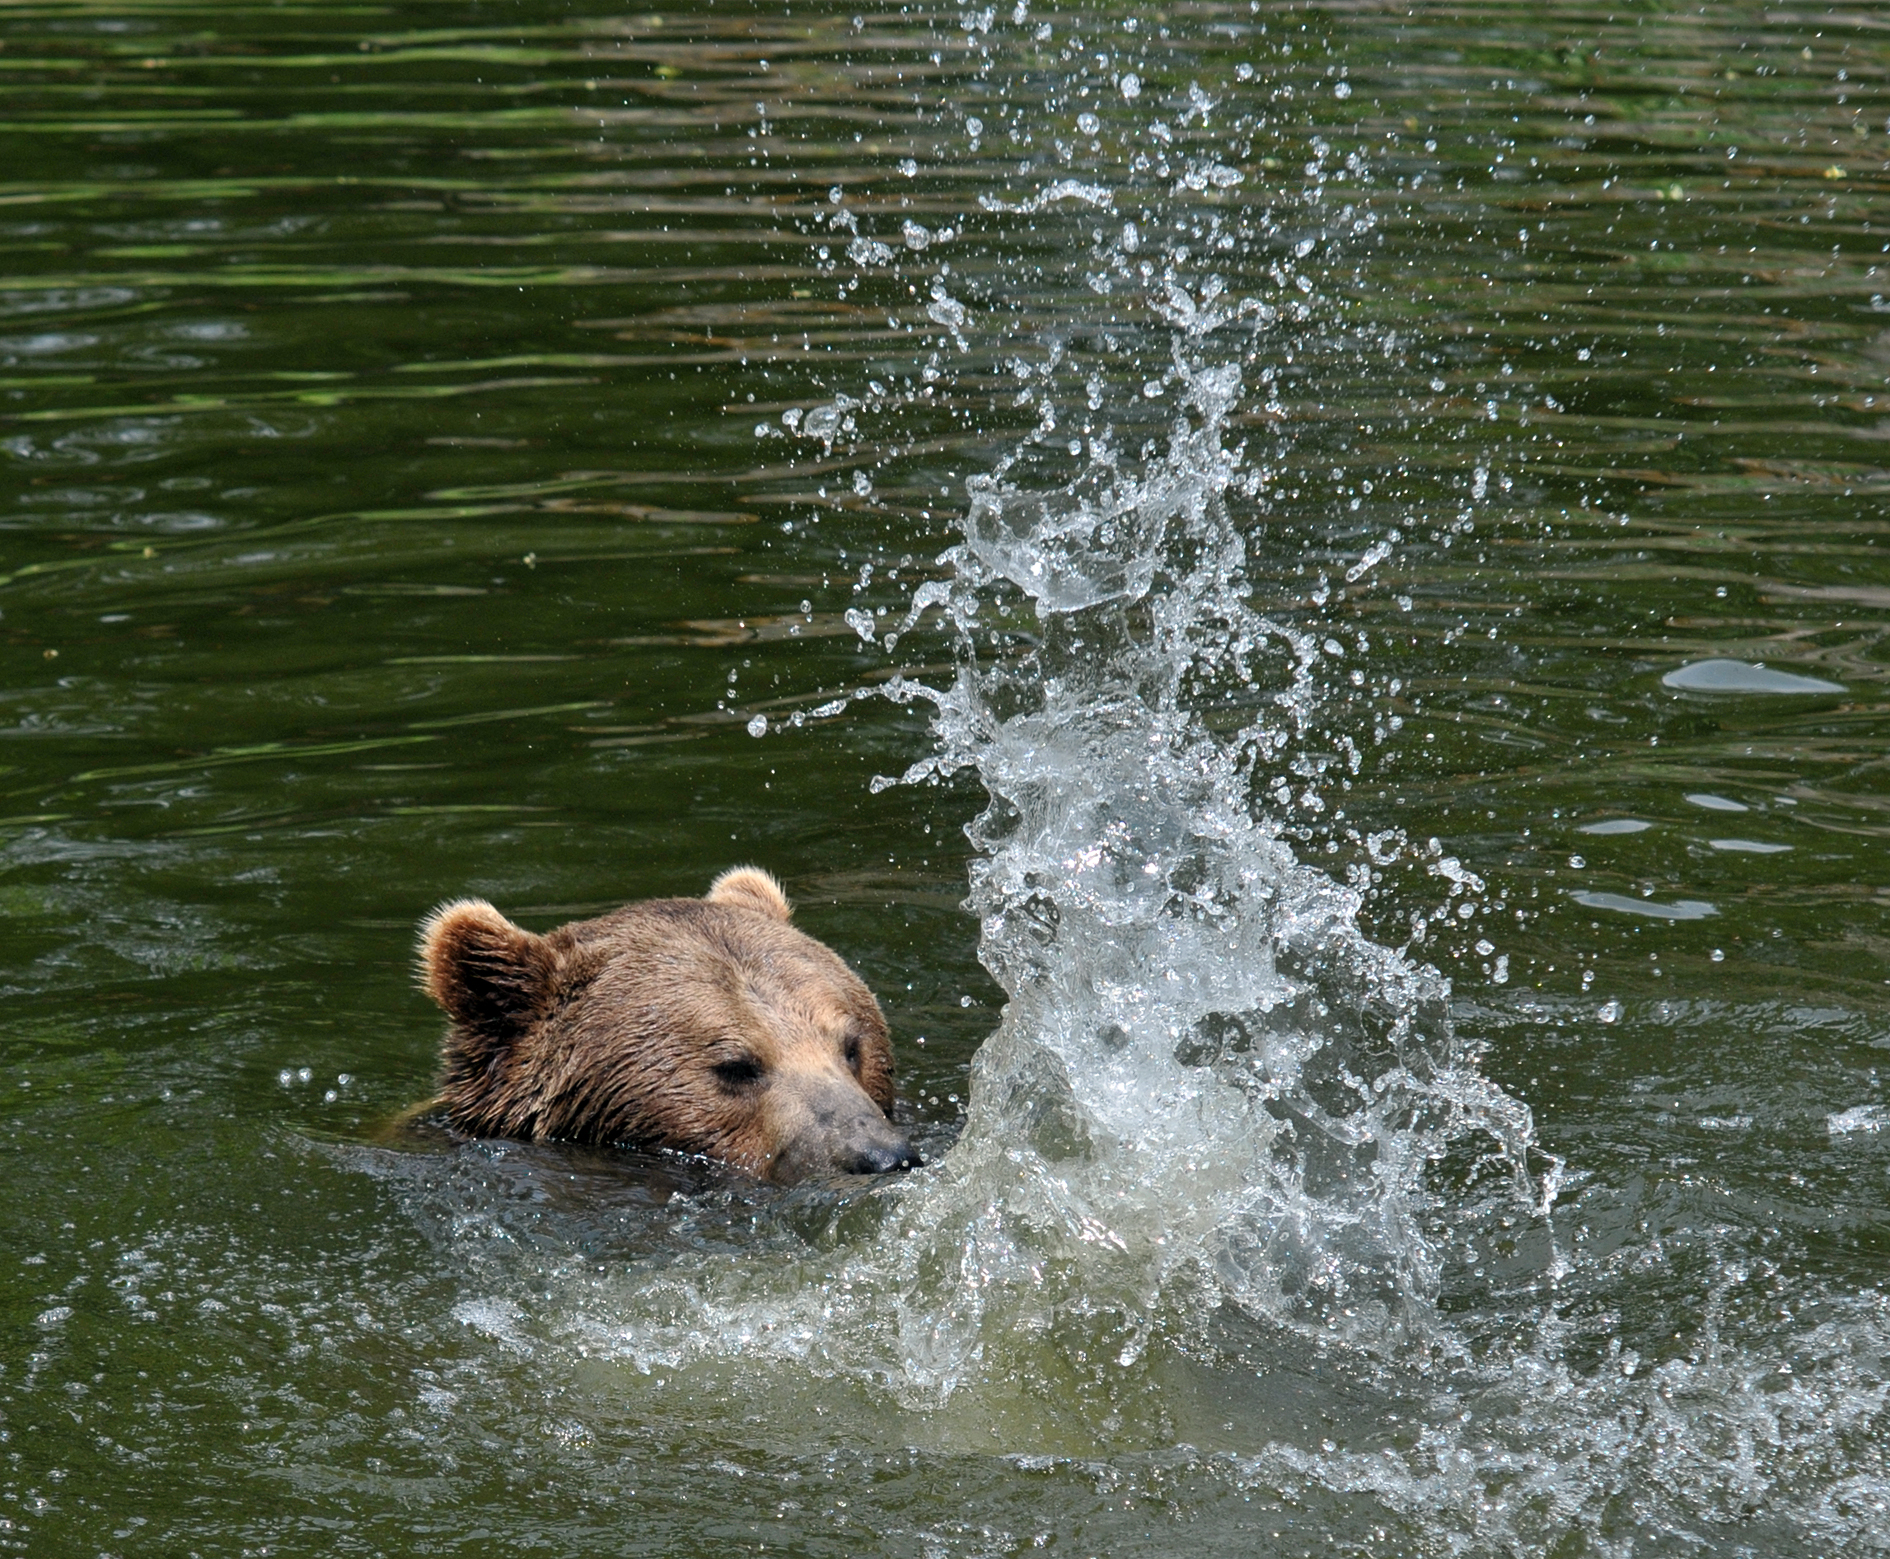 File:Brown Bear bathing.jpg - Wikimedia Commons